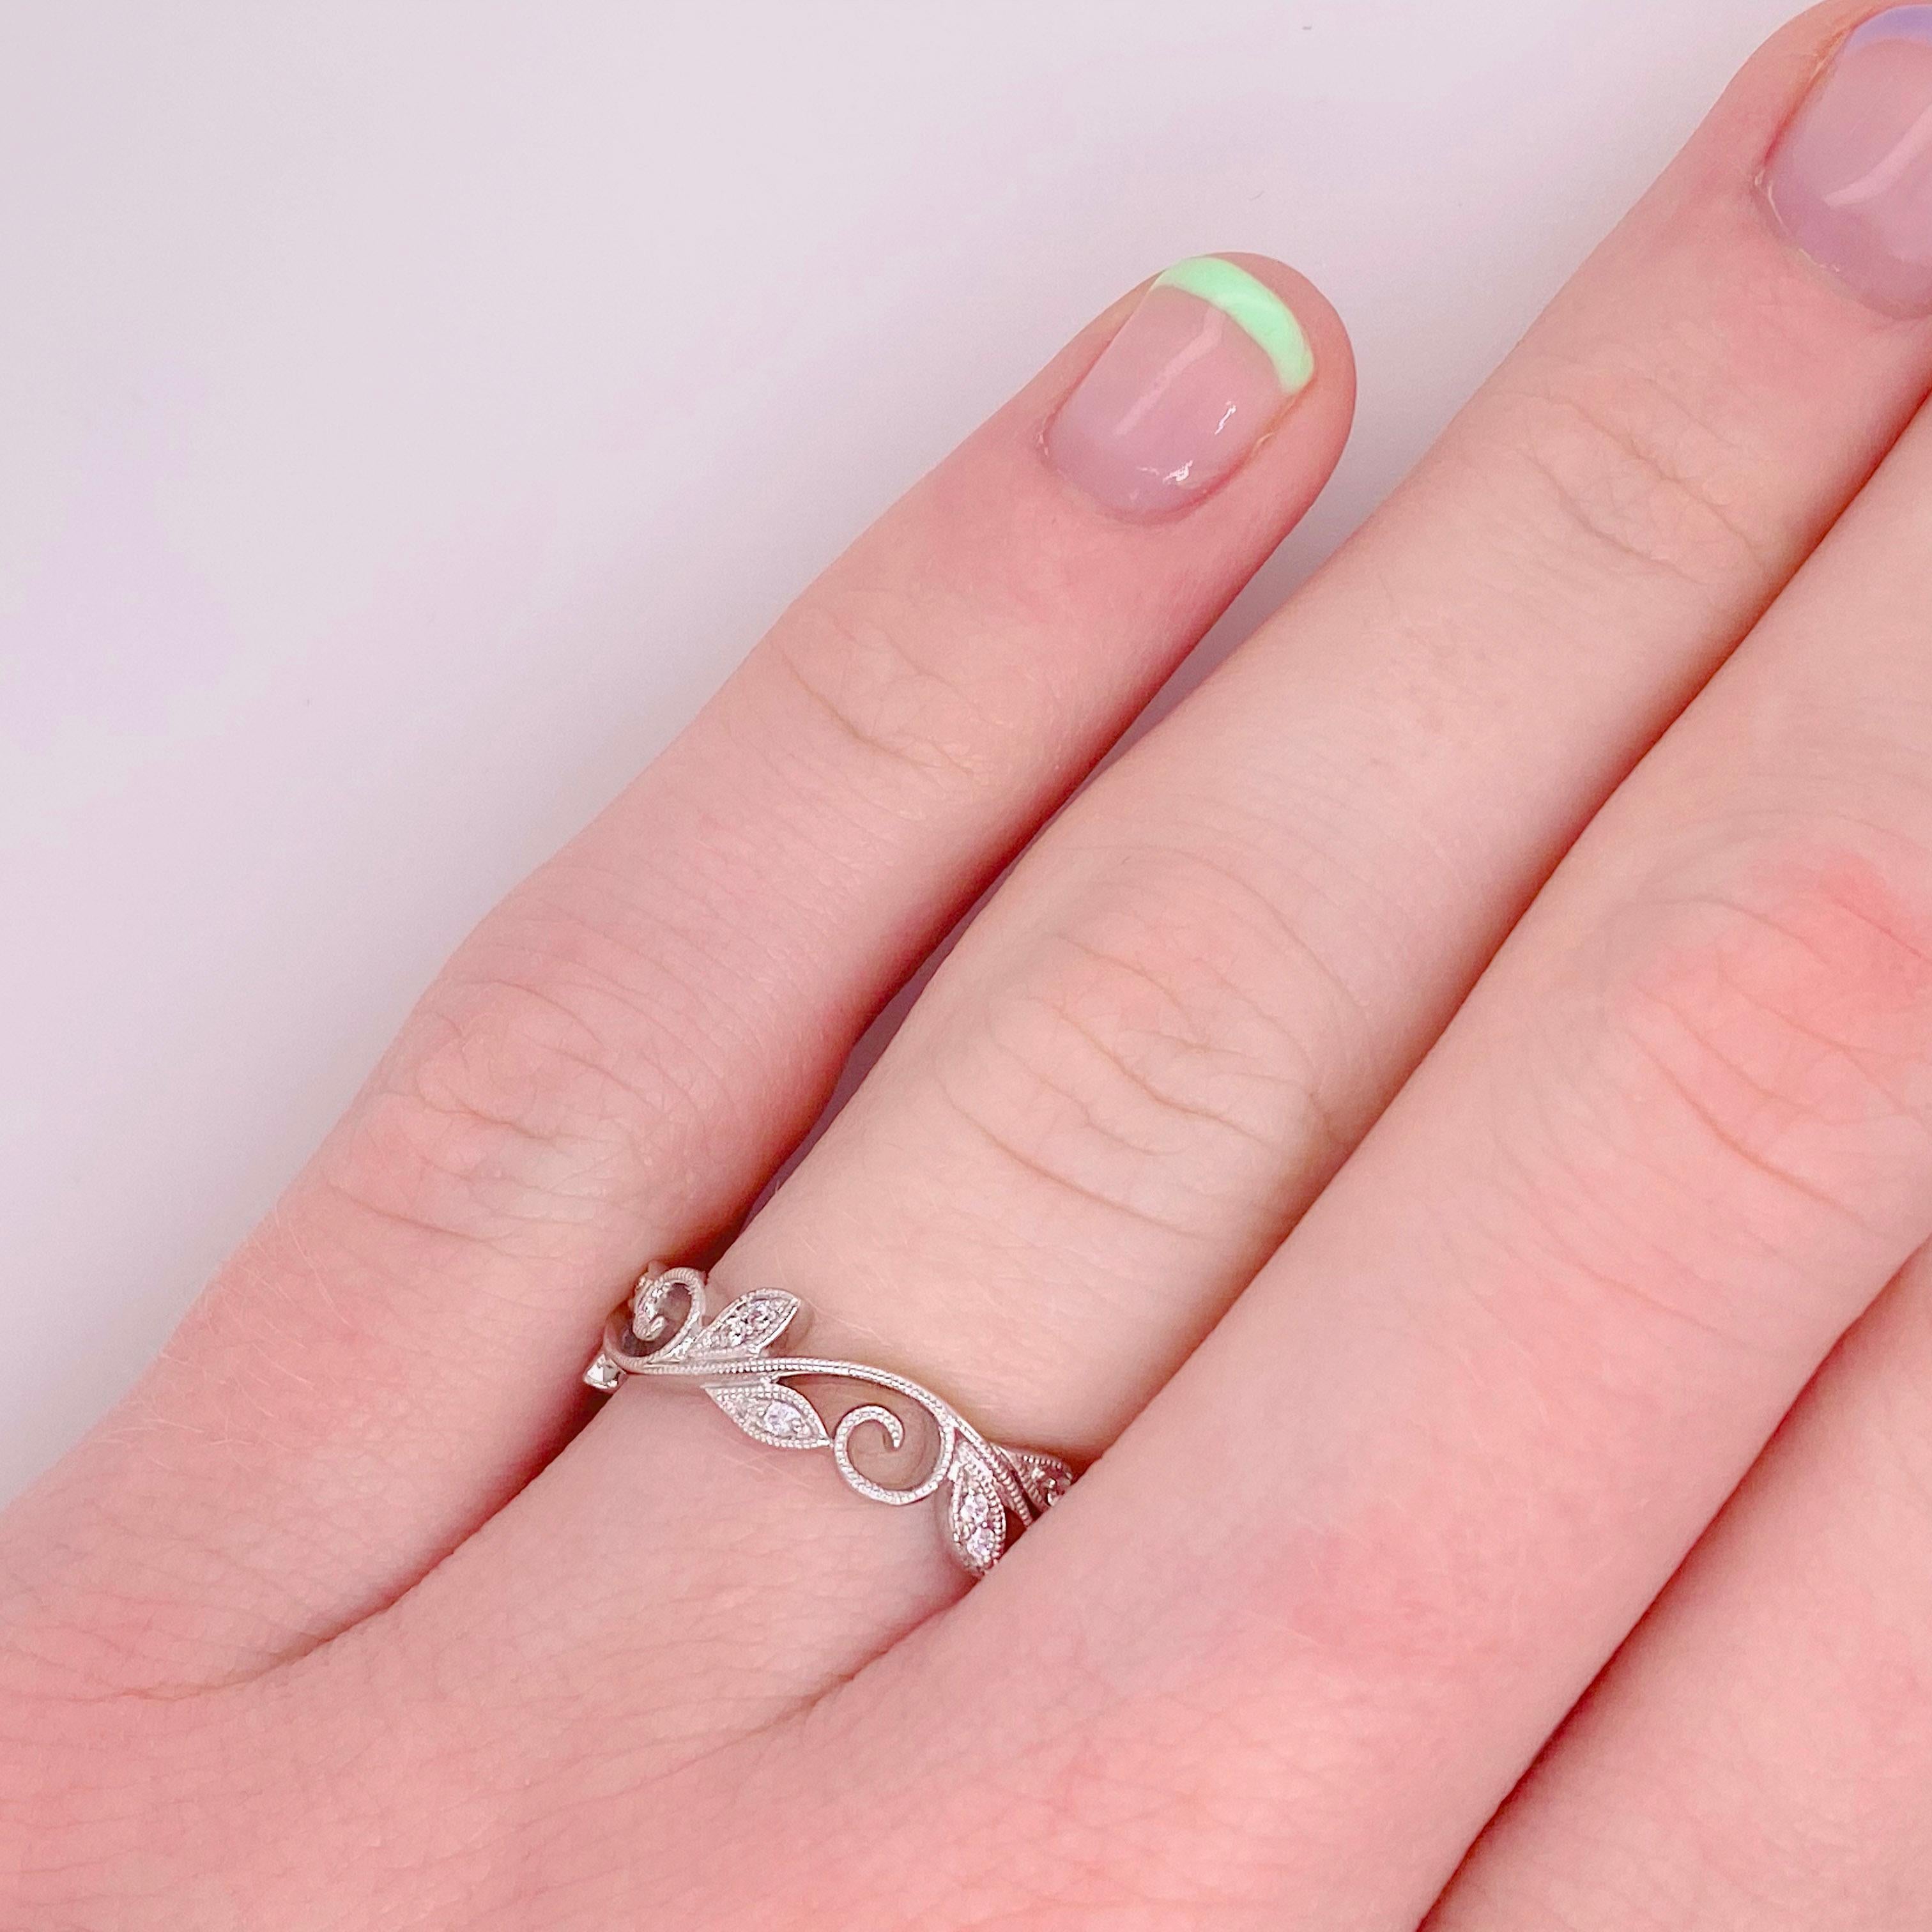 For Sale:  Flower Leaf Ring W Filigree Design W Diamonds & 14k White Gold, Ring is Sizable 4